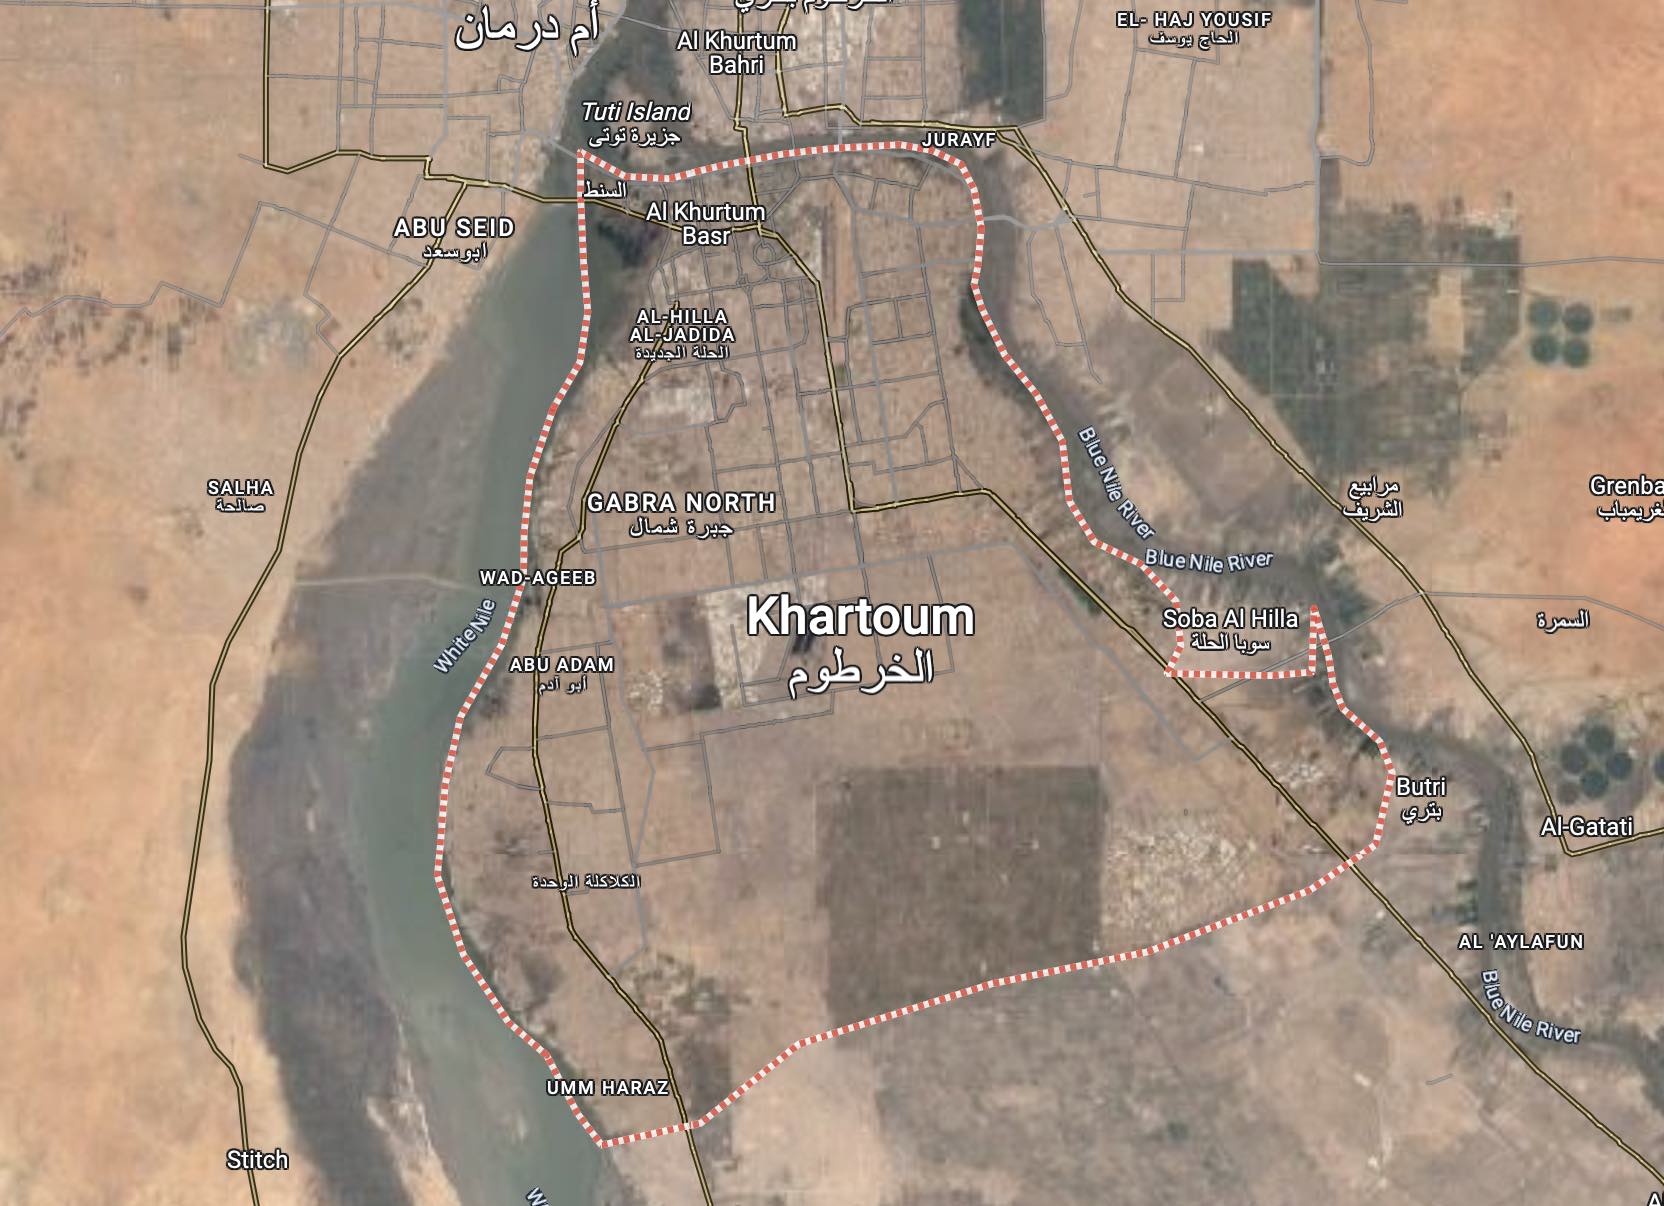 SUDAN CRISIS: Khartoum fighting continues despite new ceasefire